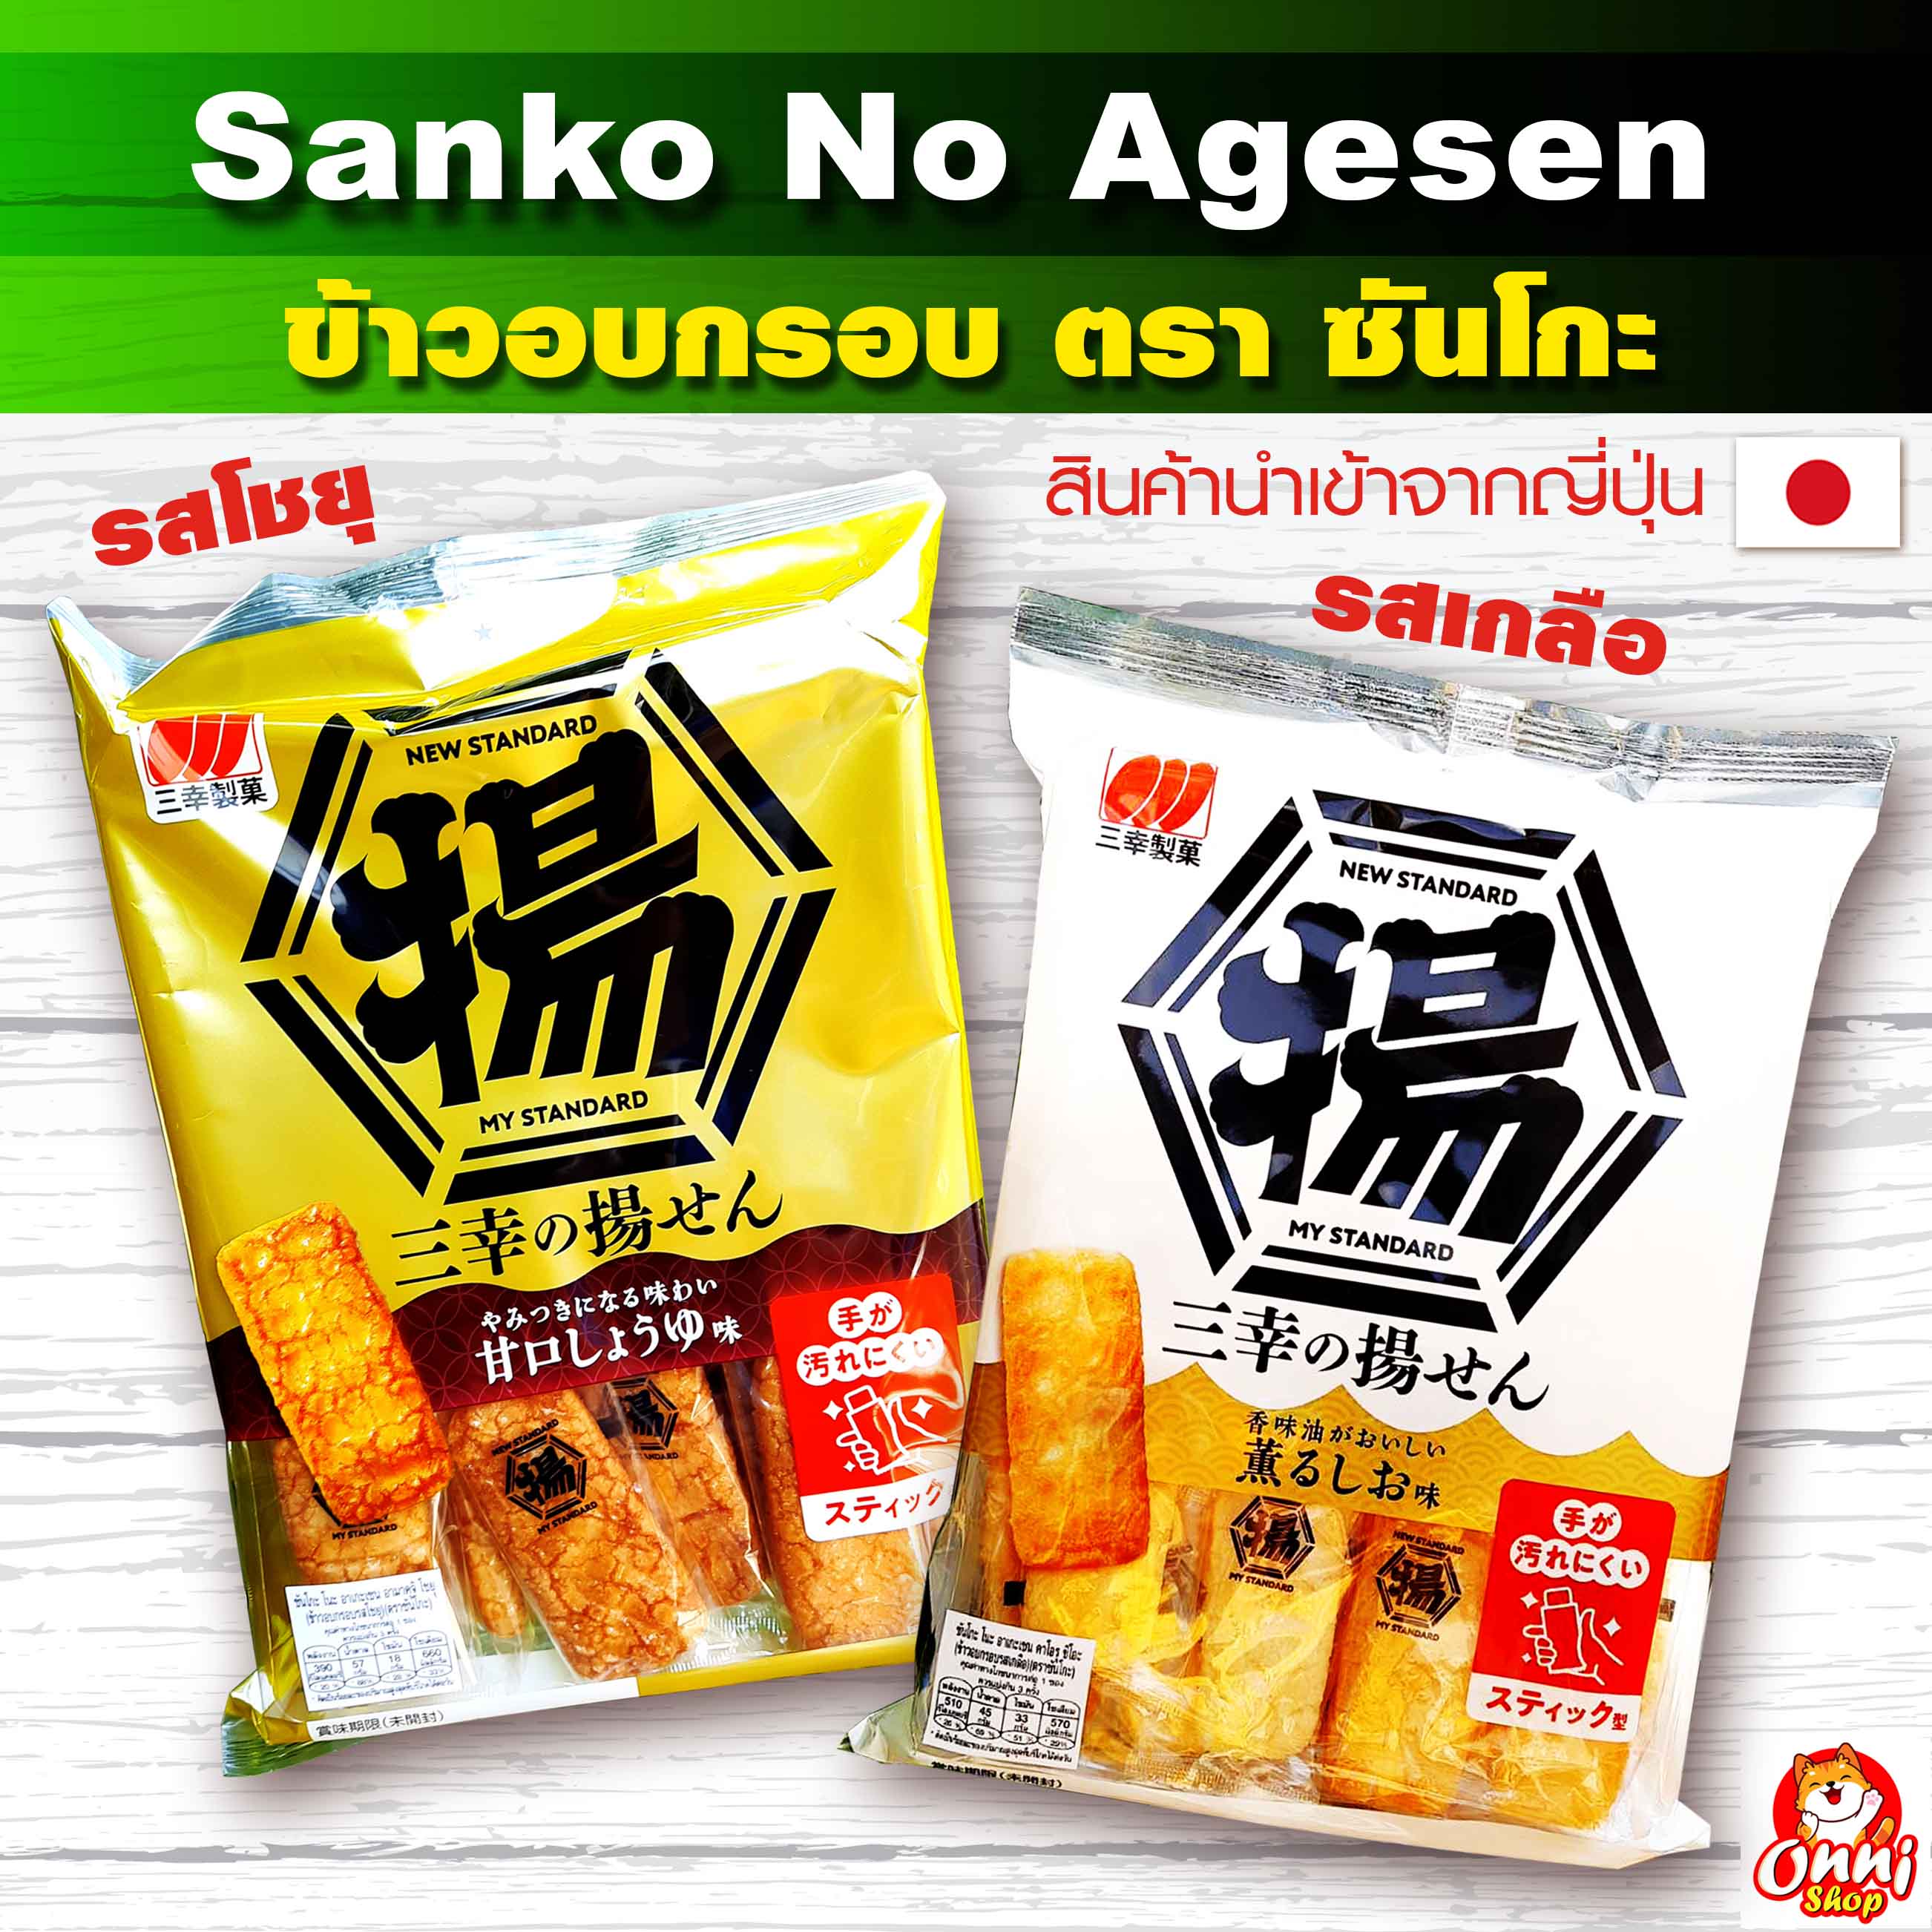 Sanko No Yusen Rice Cracker ขนมข้าวอบกรอบ จากญี่ปุ่น